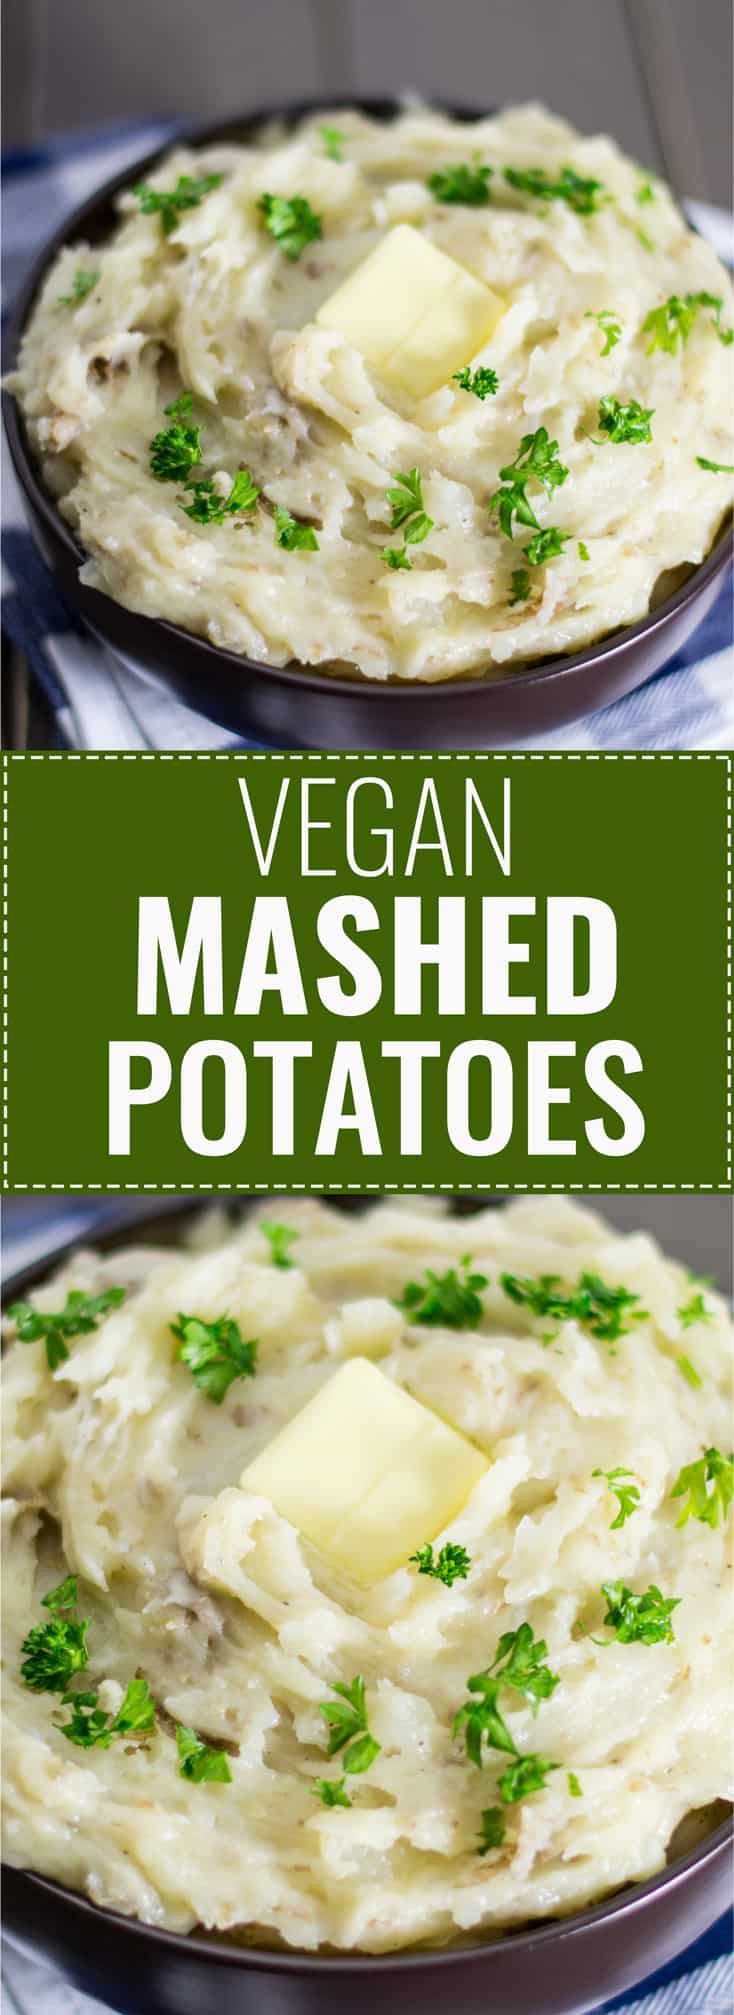 Vegan Mashed Potatoes Recipe
 Vegan Mashed Potatoes Recipe dairy free and delicious